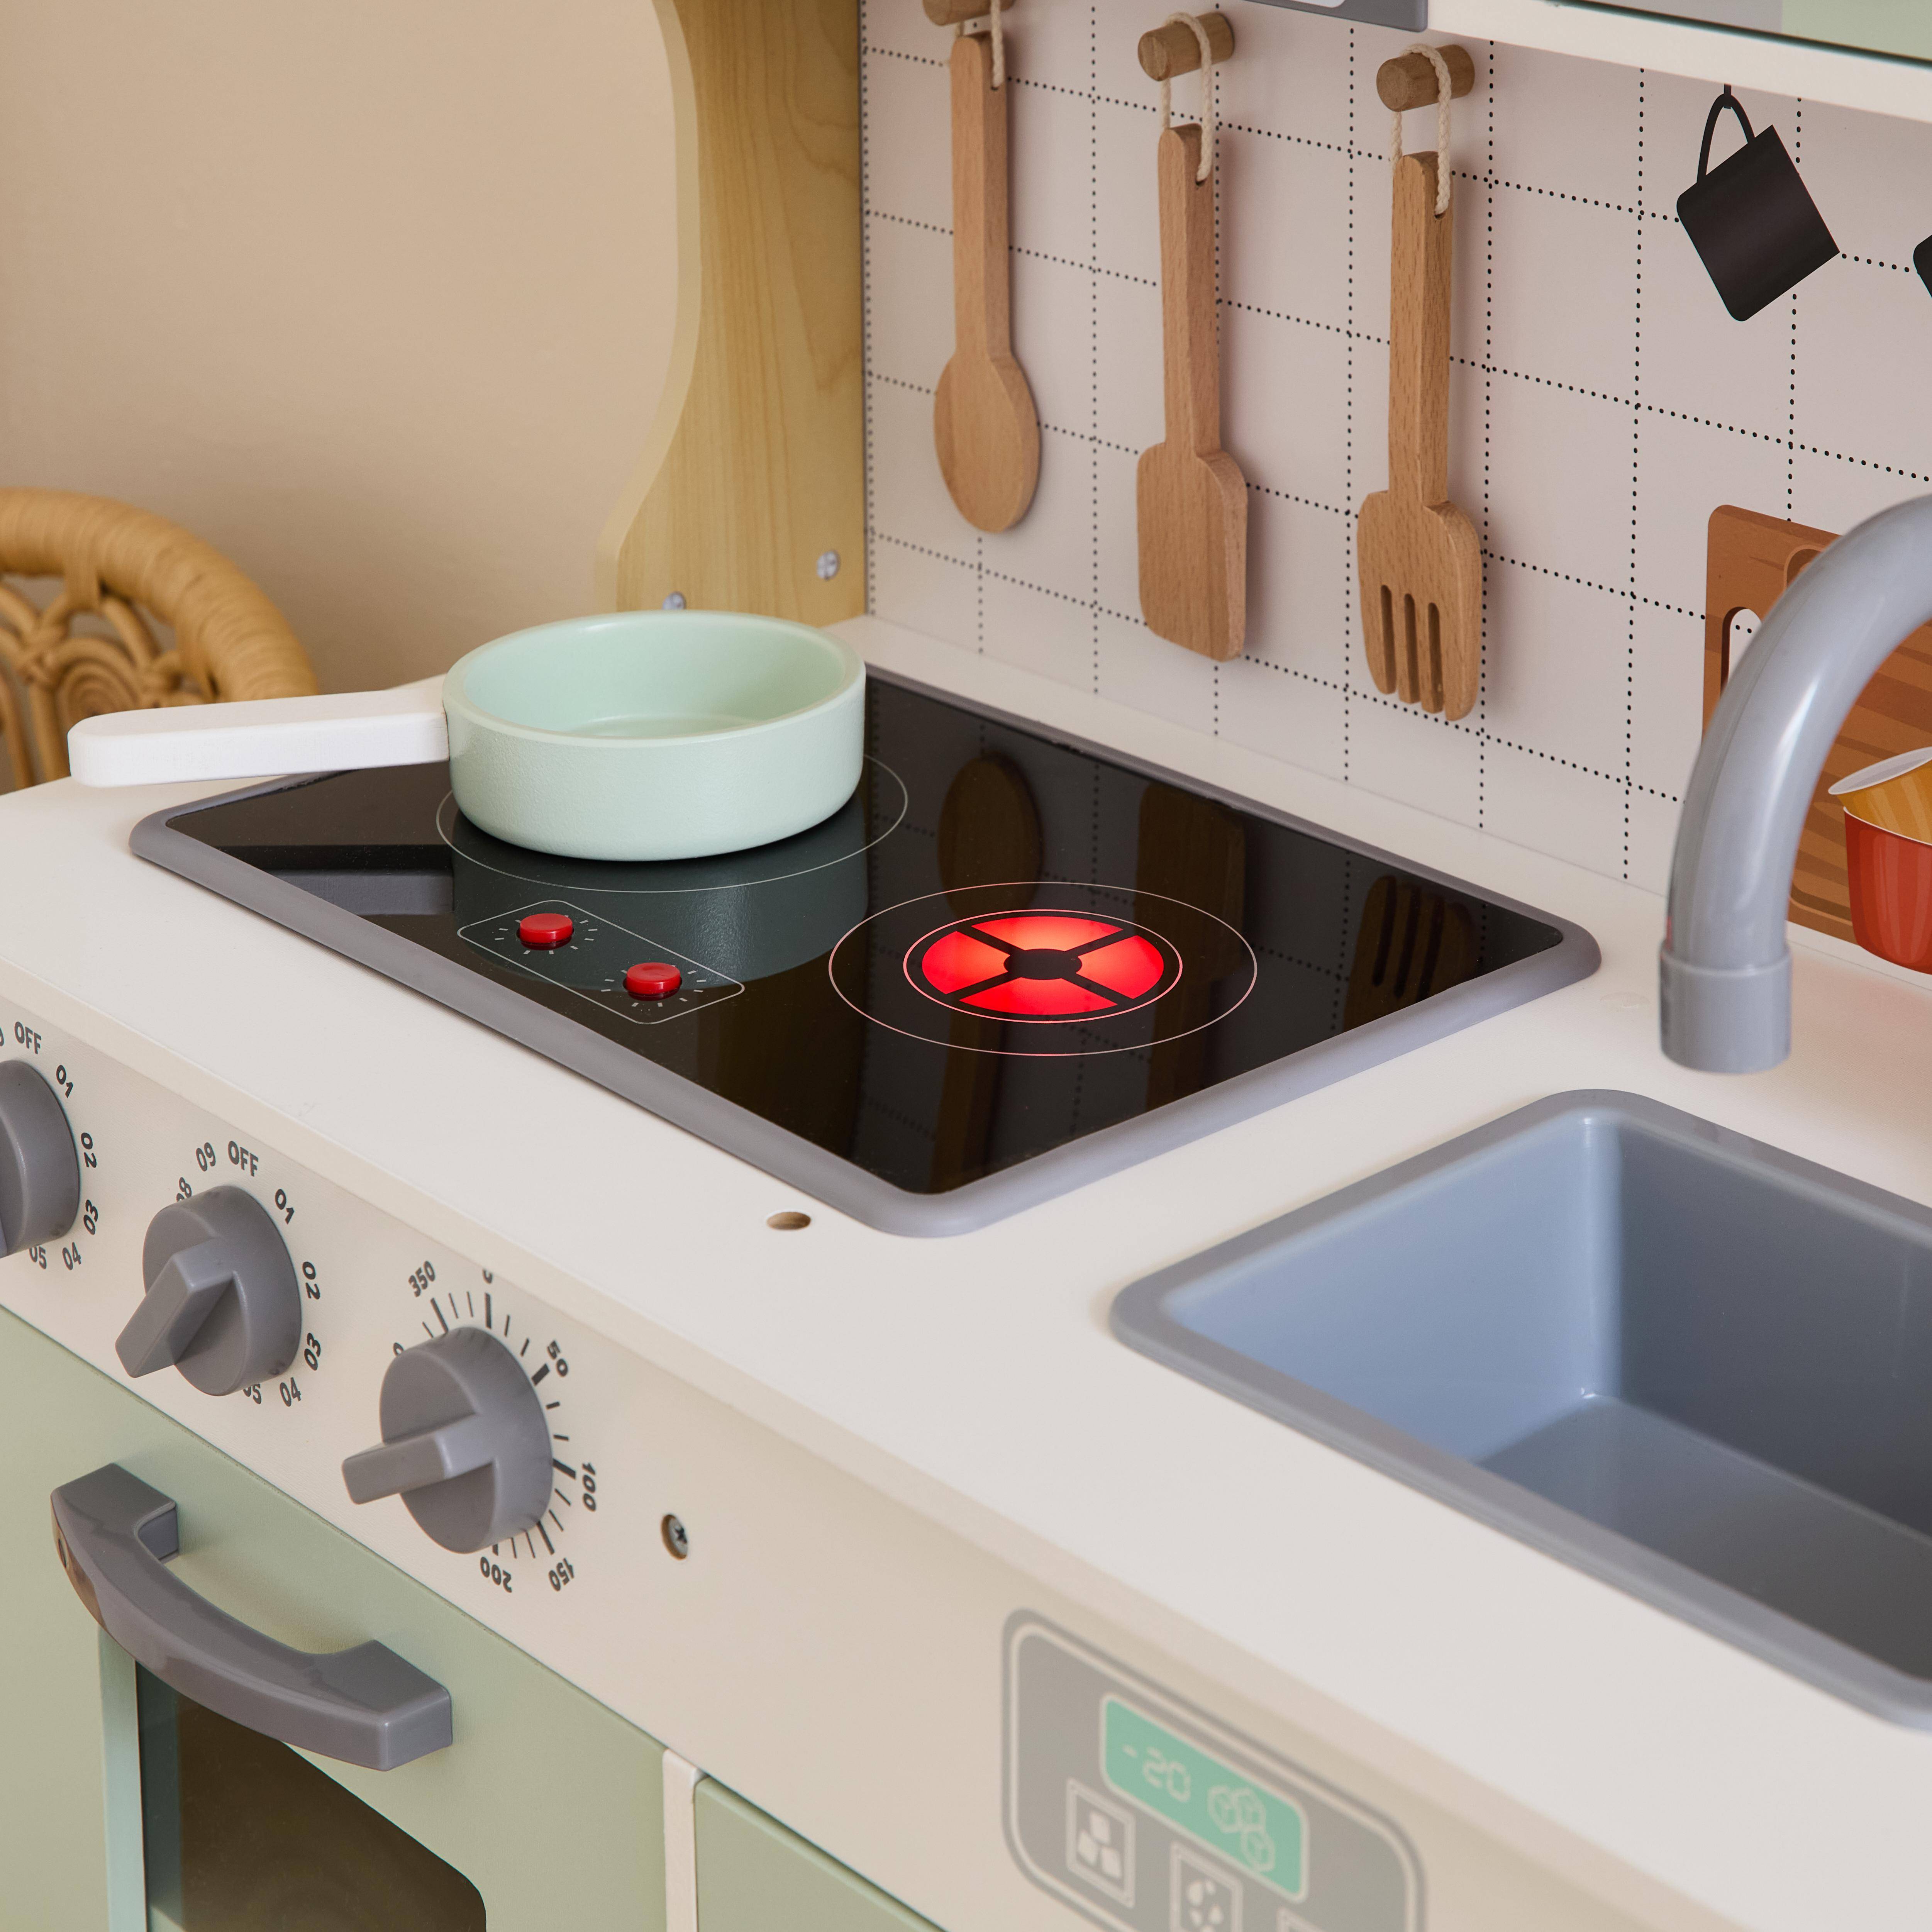 Panel de cocina infantil, accesorios incluidos, campana, placa de cocción, microondas electrónico,sweeek,Photo3